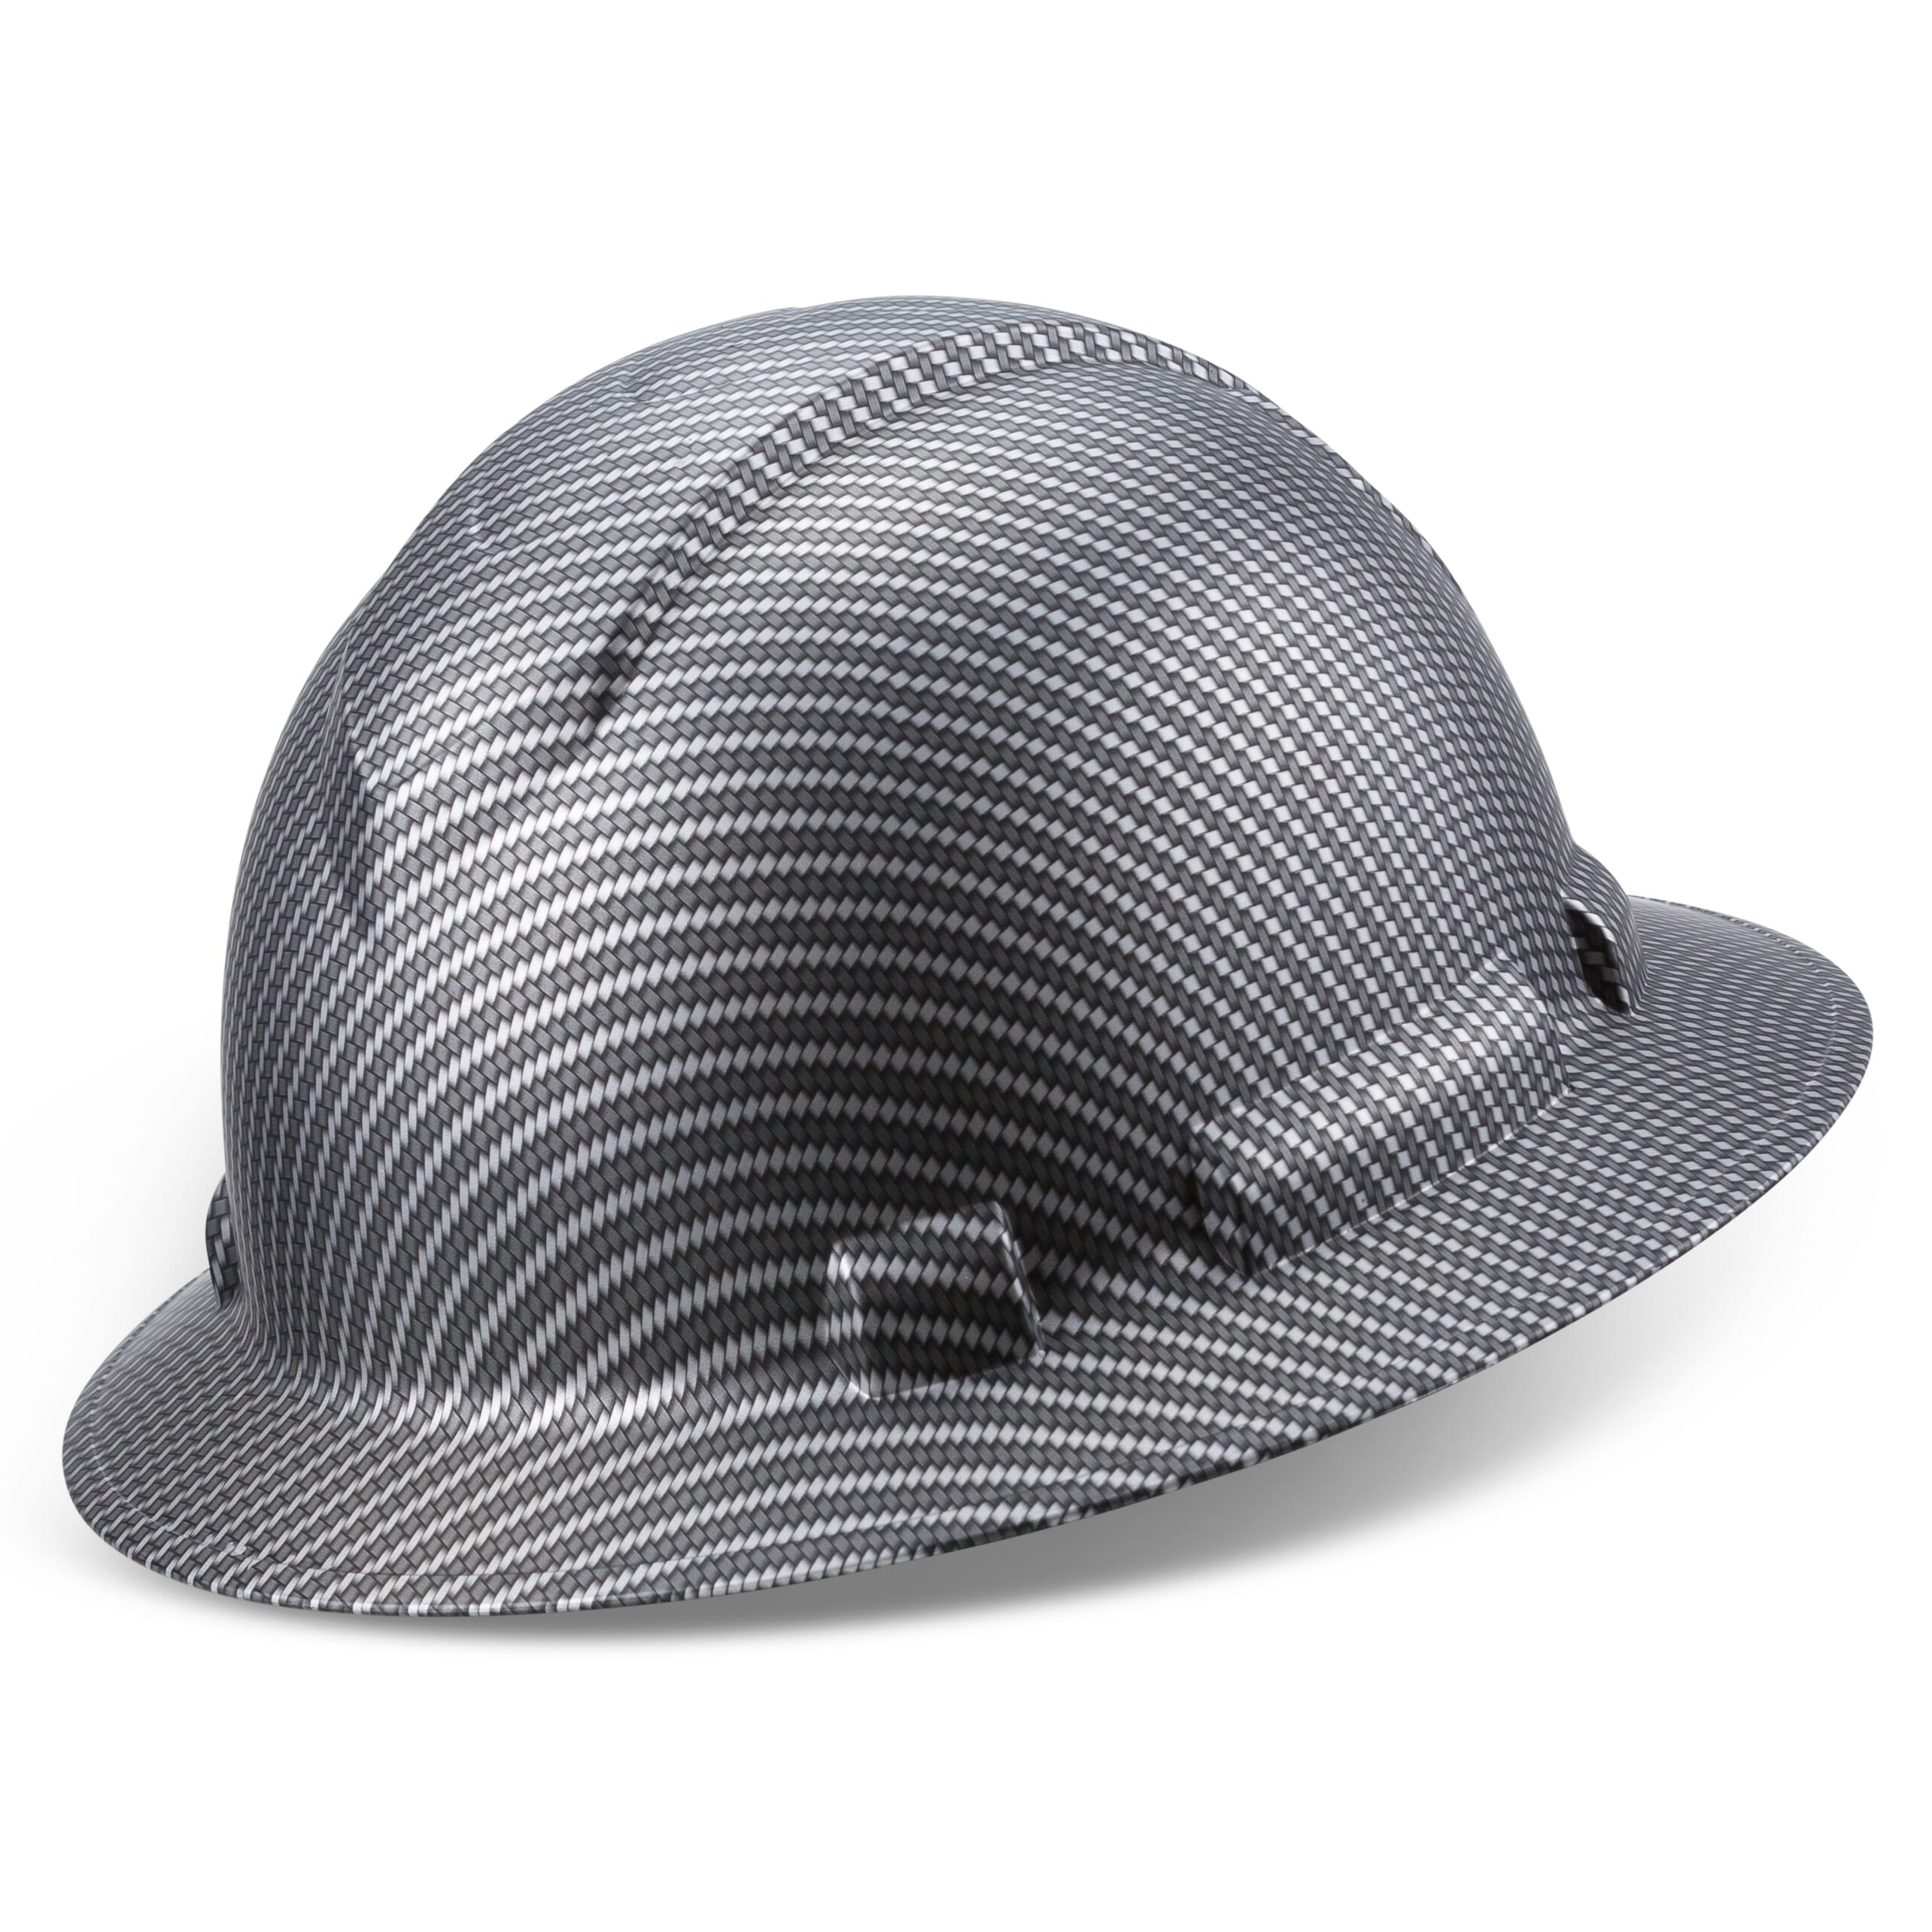 Full Brim Pyramex Hard Hat, Custom Sleek In Silver Design, Safety Helmet, 6 Point